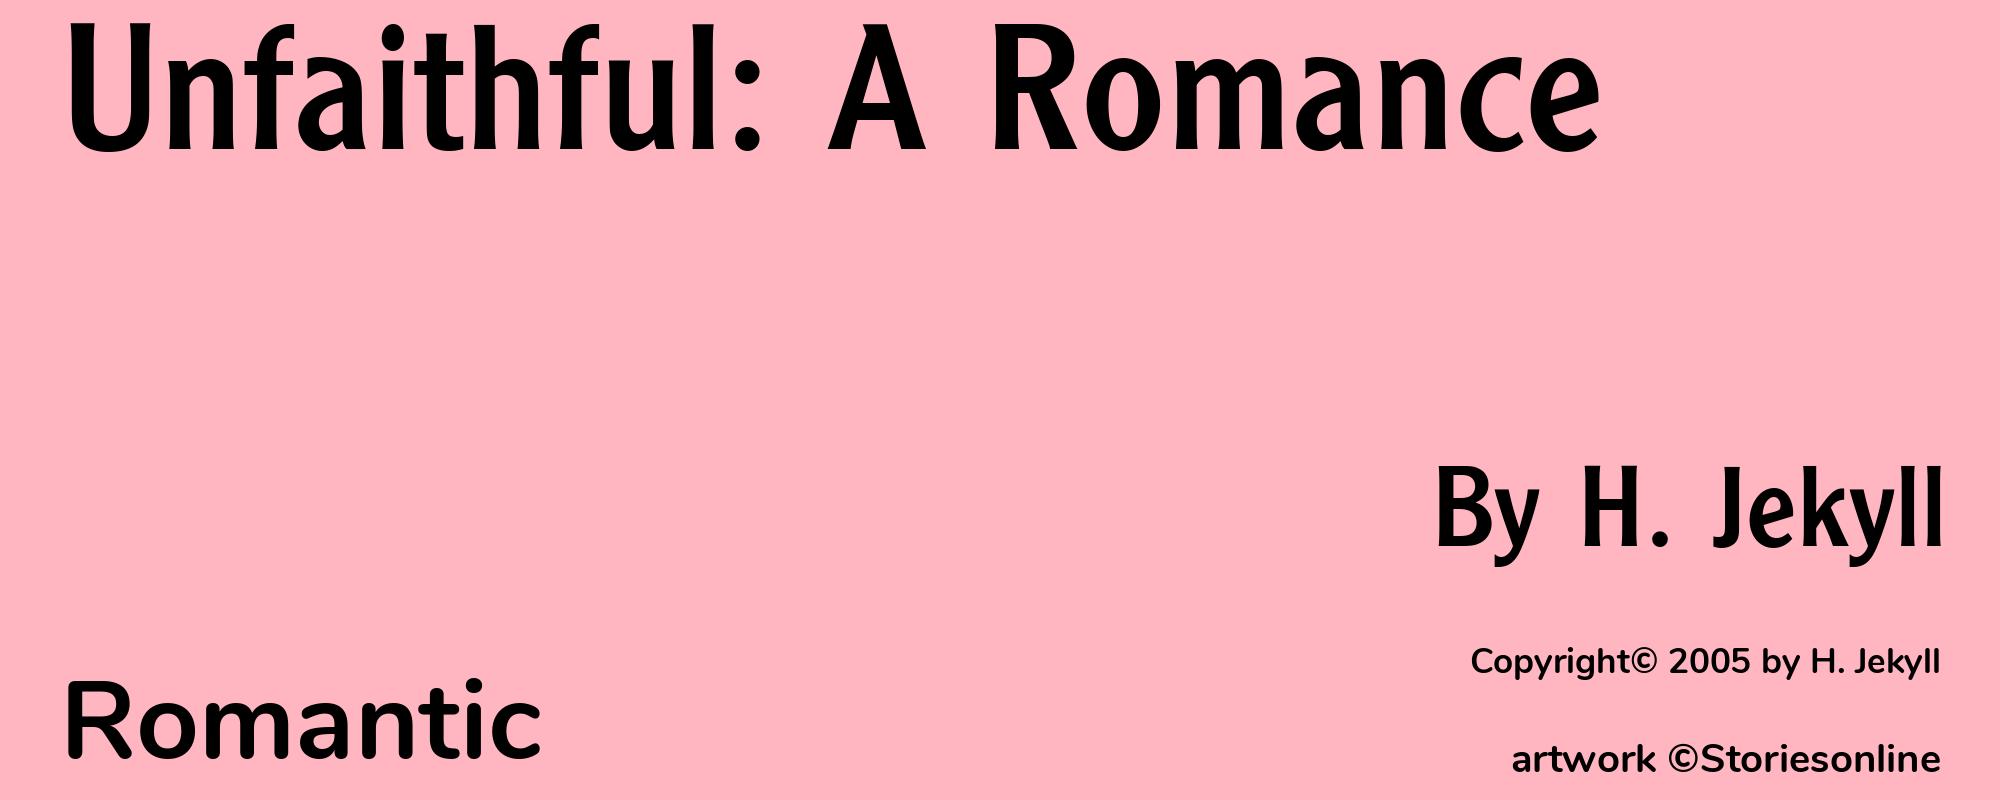 Unfaithful: A Romance - Cover